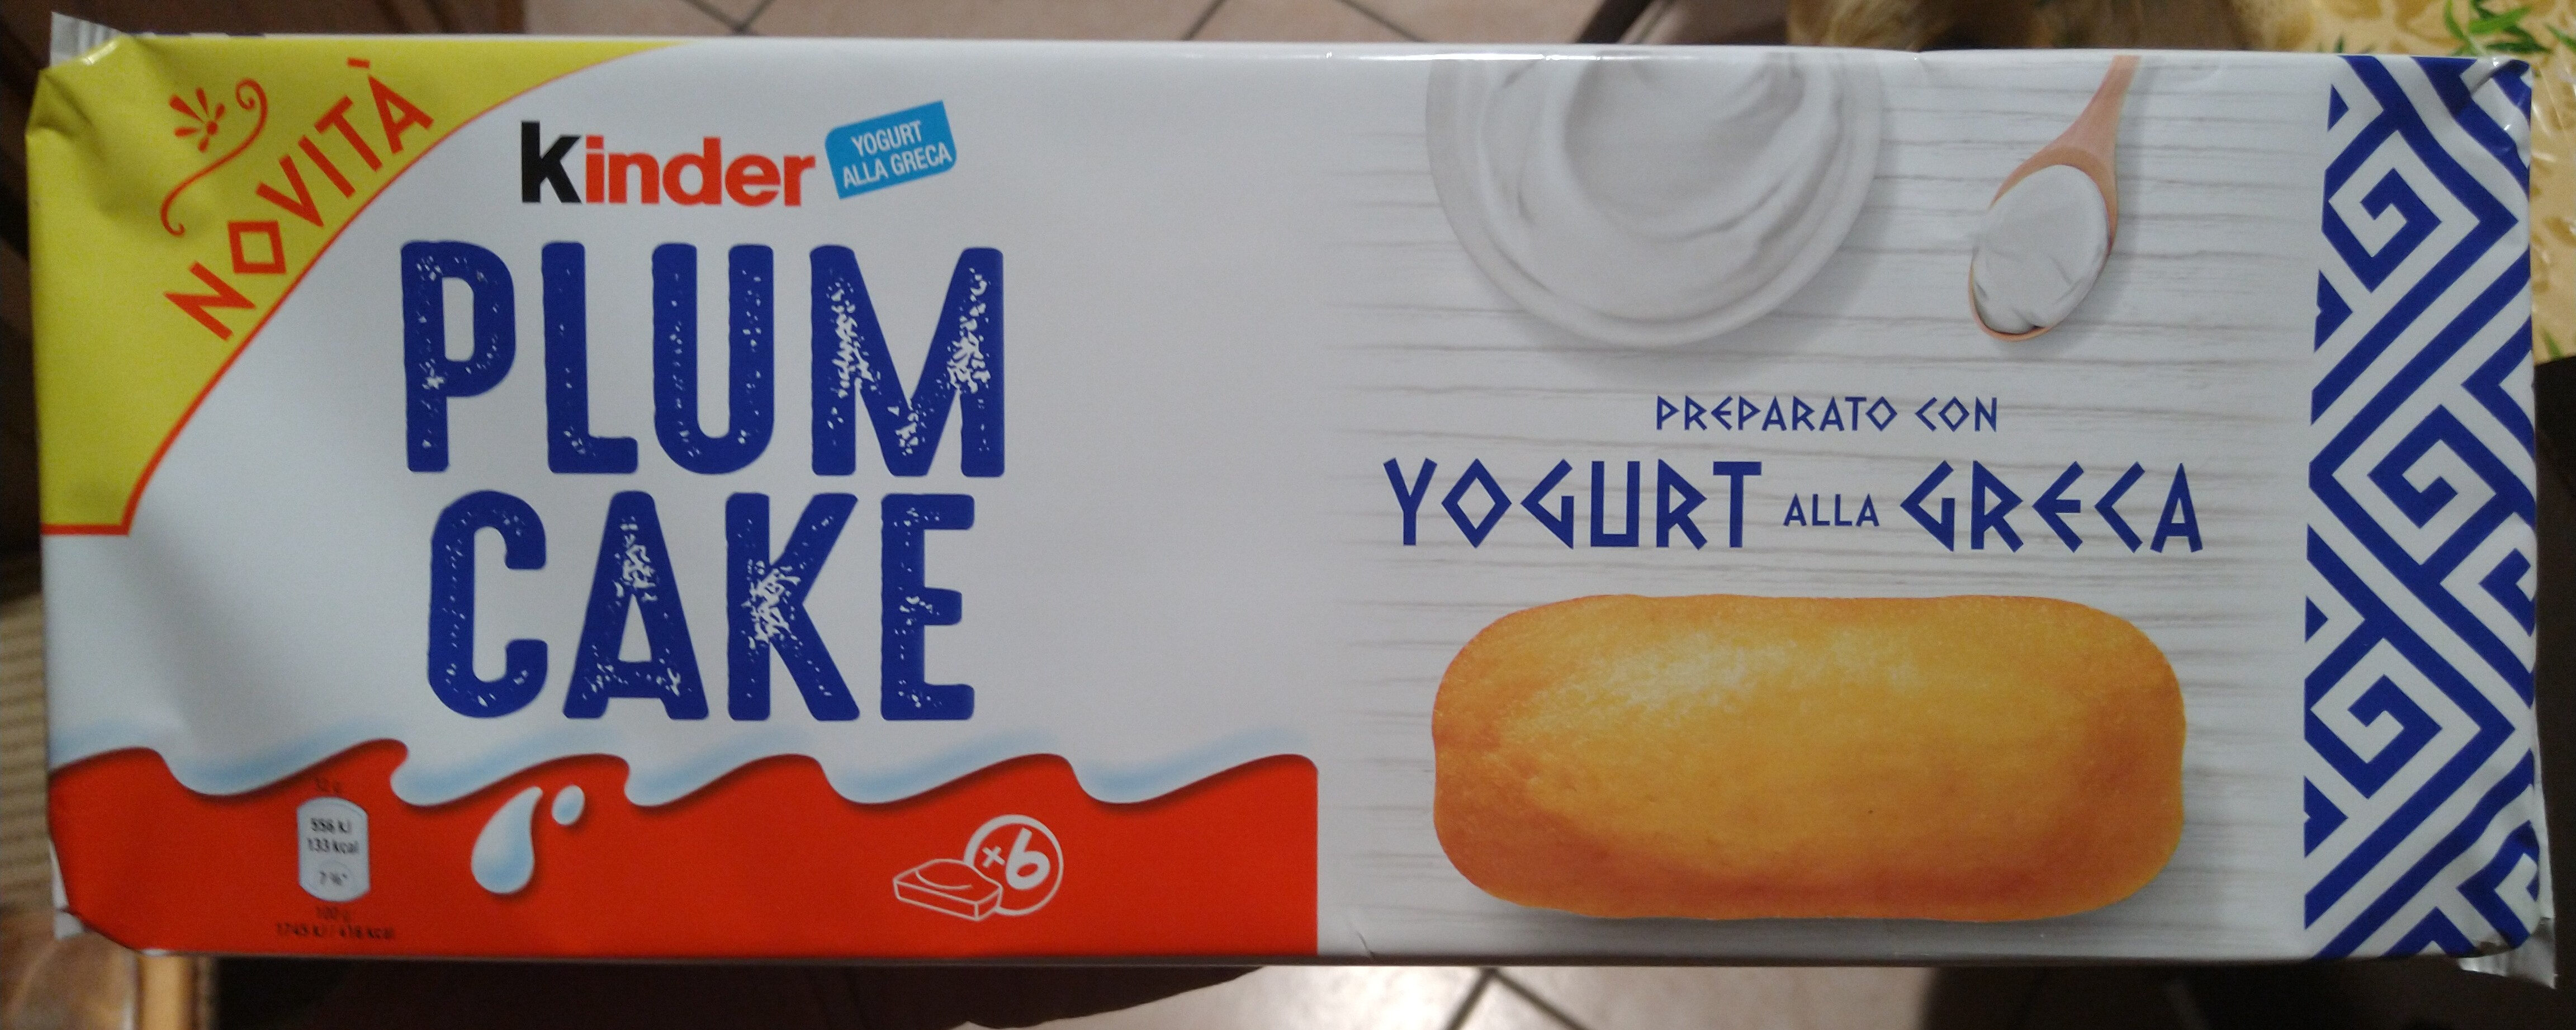 Plum cake preparato con yogurt alla greca - Produit - it